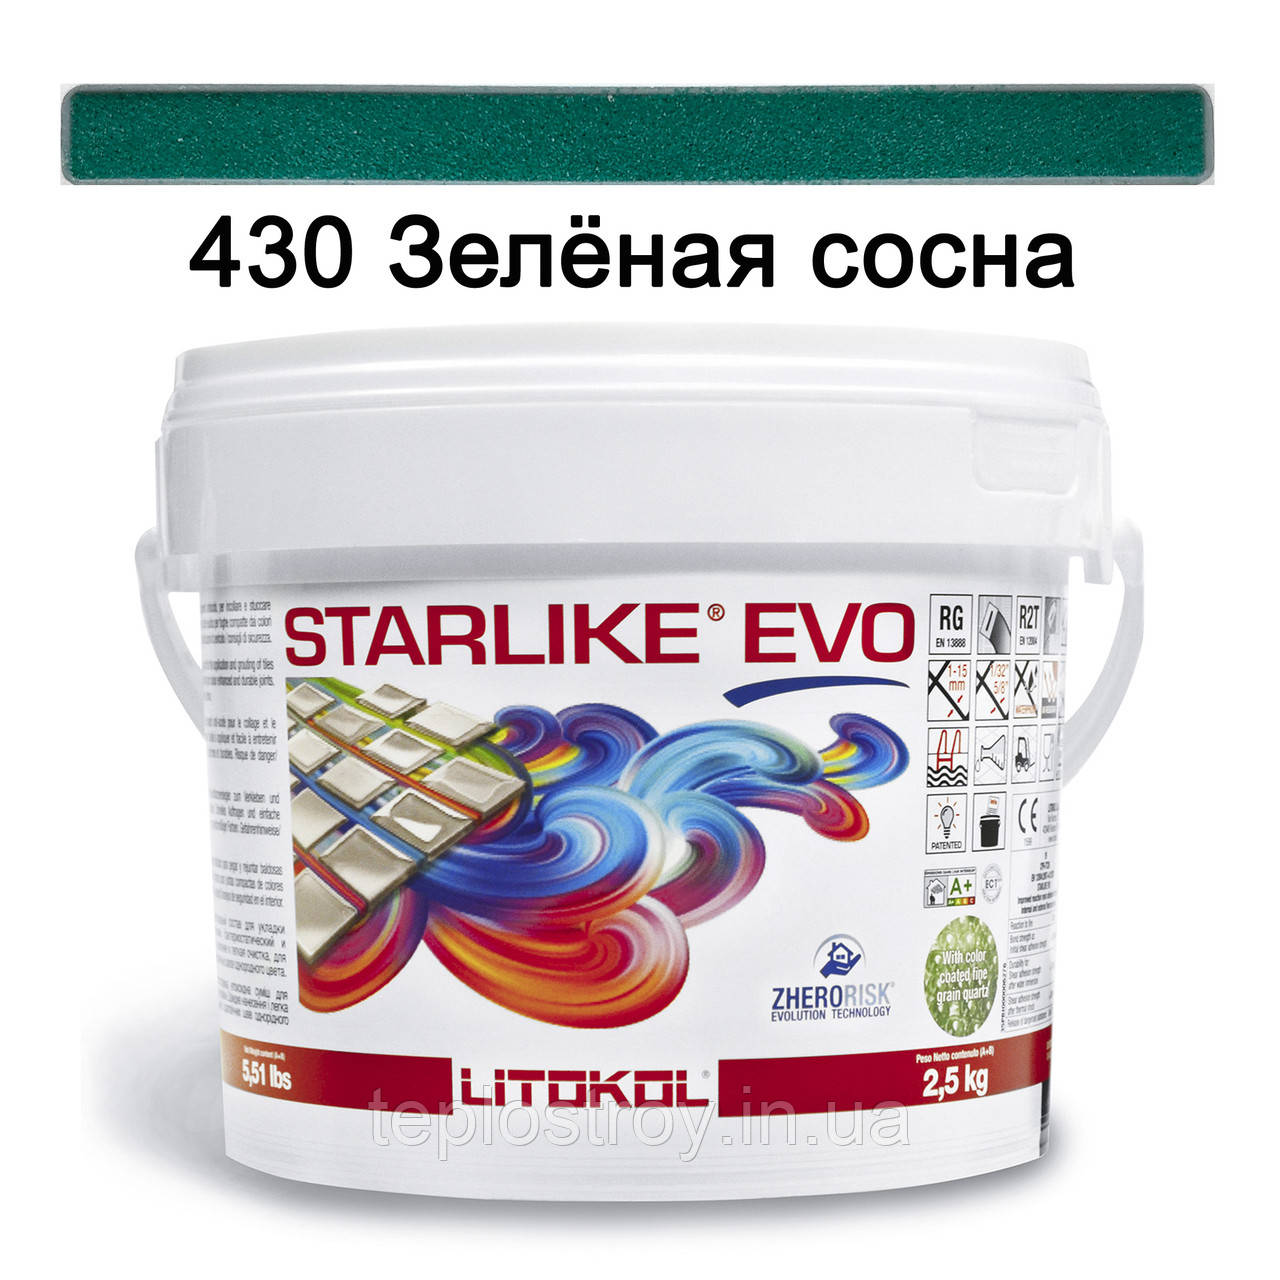 Епоксидна затирка Starlike EVO 430 (Зелена сосна) GLAM COLLECTION  2.5 кг